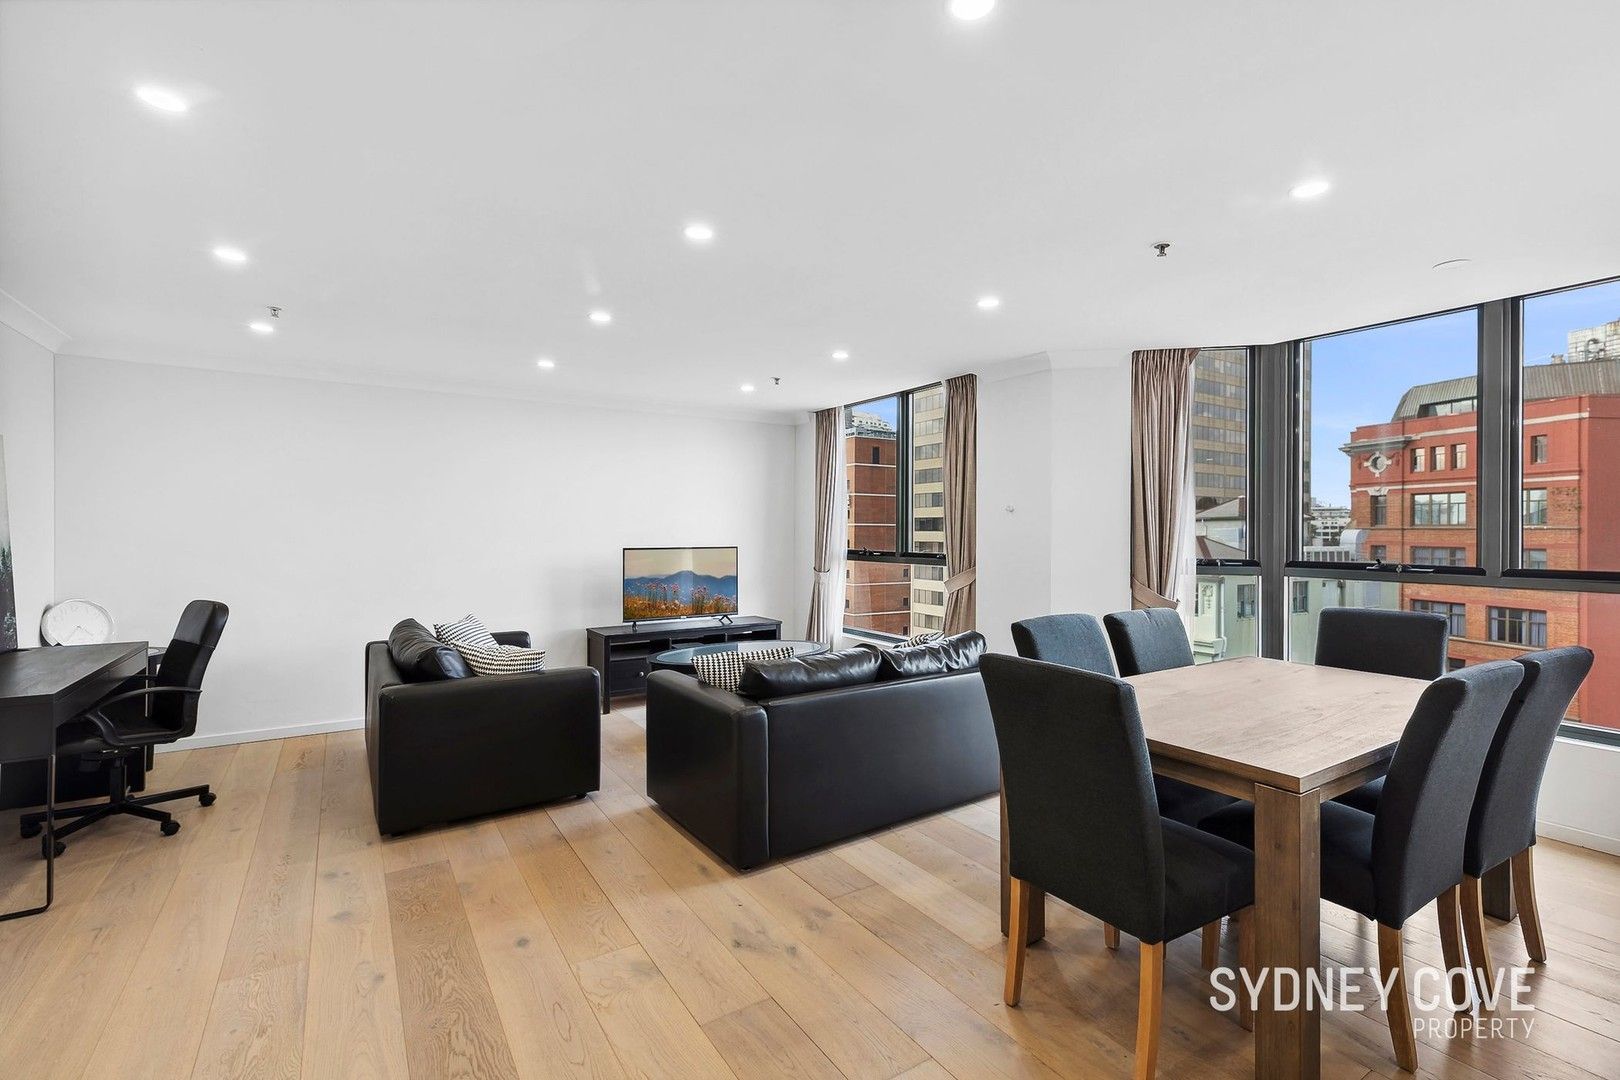 2 bedrooms Apartment / Unit / Flat in 743-755 George Street HAYMARKET NSW, 2000